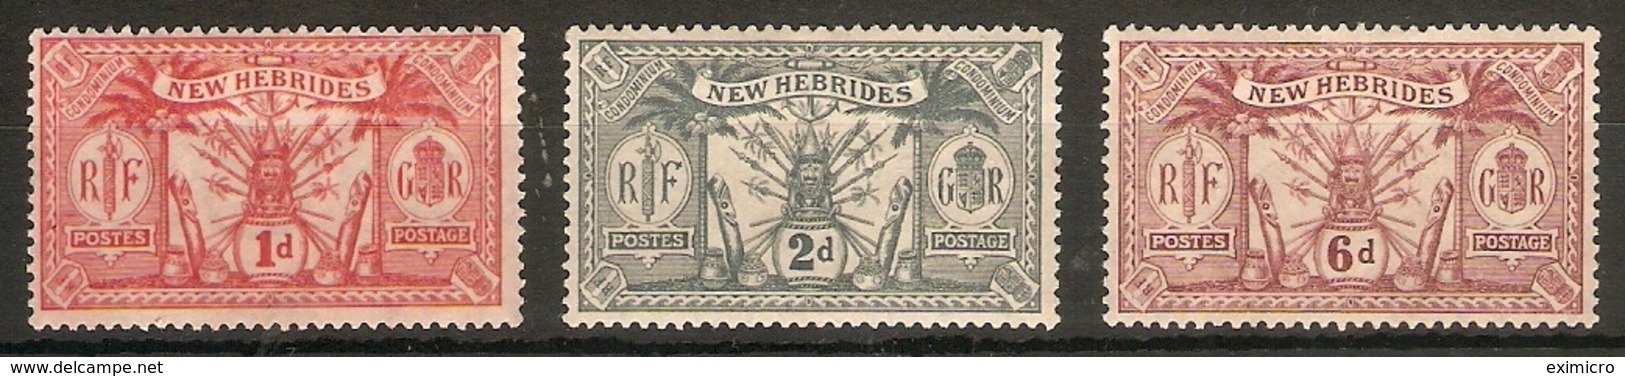 NEW HEBRIDES 1921 WATERMARK MULTIPLE SCRIPT CA SET OF 3  SG 36/39 LIGHTLY MOUNTED MINT Cat £19 - Unused Stamps